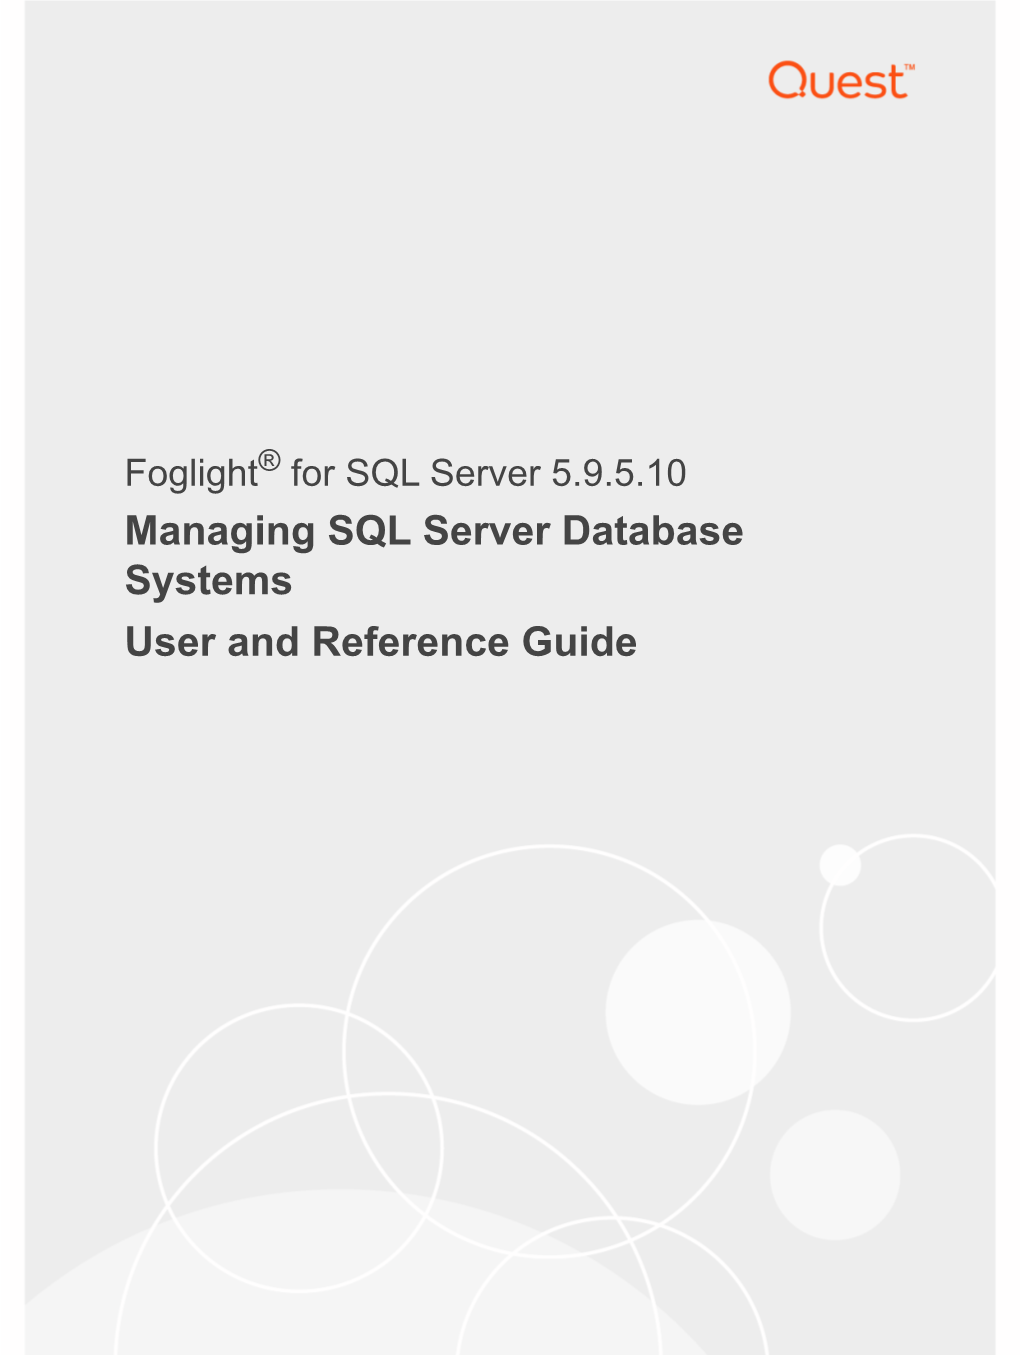 Managing SQL Server Database Systems User Guide